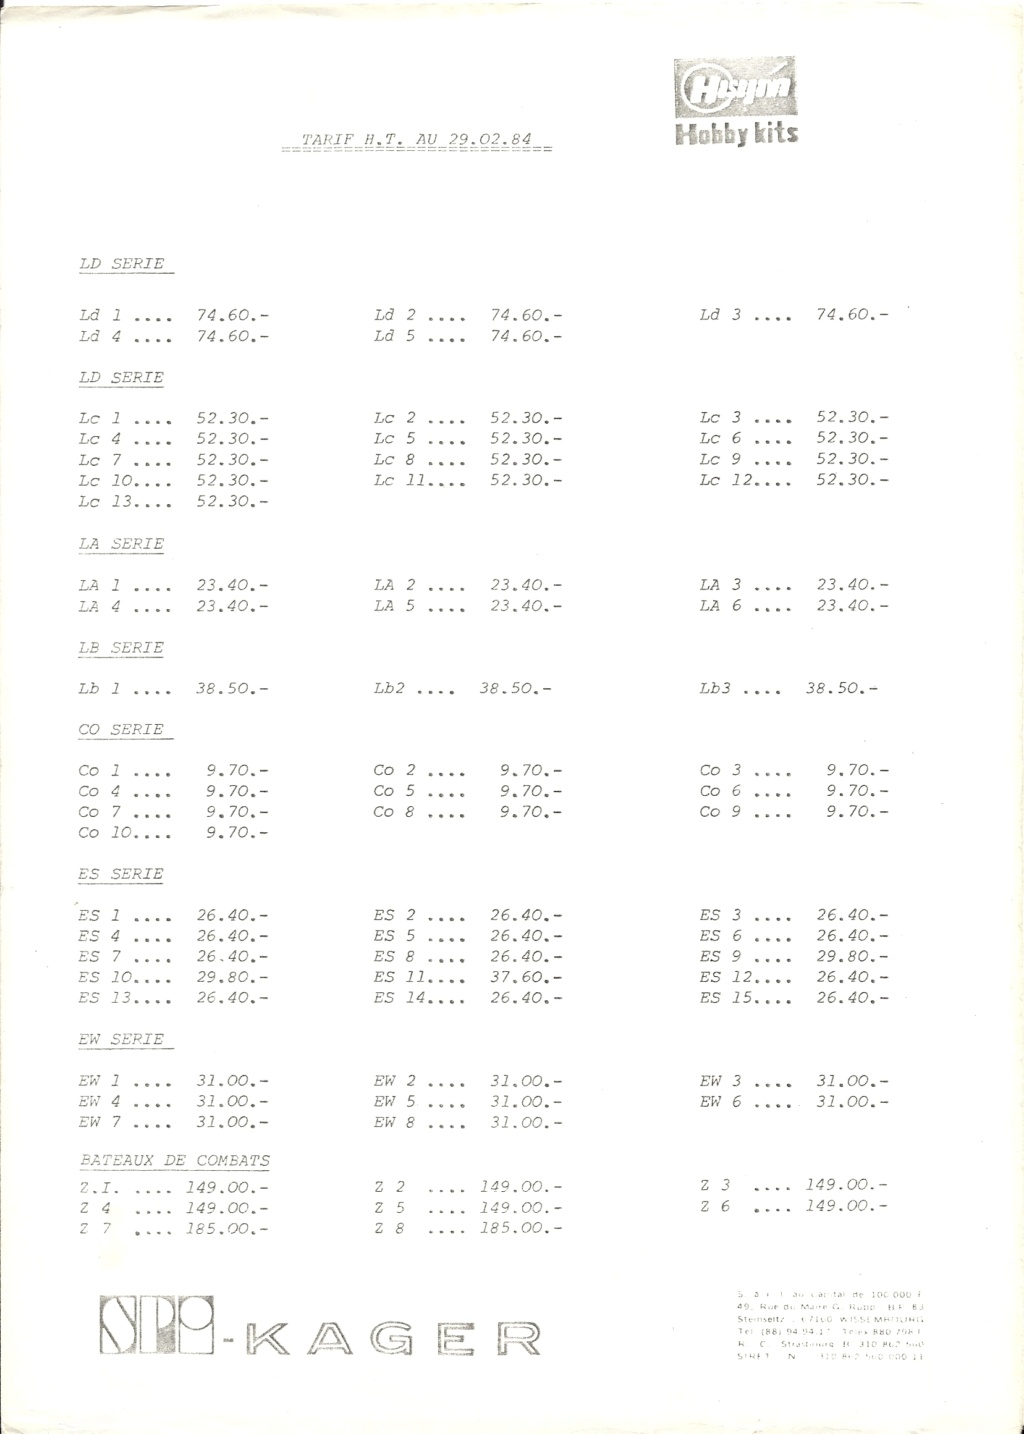 [KAGER 1984] HASEGAWA Catalogue avions de lignes et tarif revendeur 1984  Kager_47